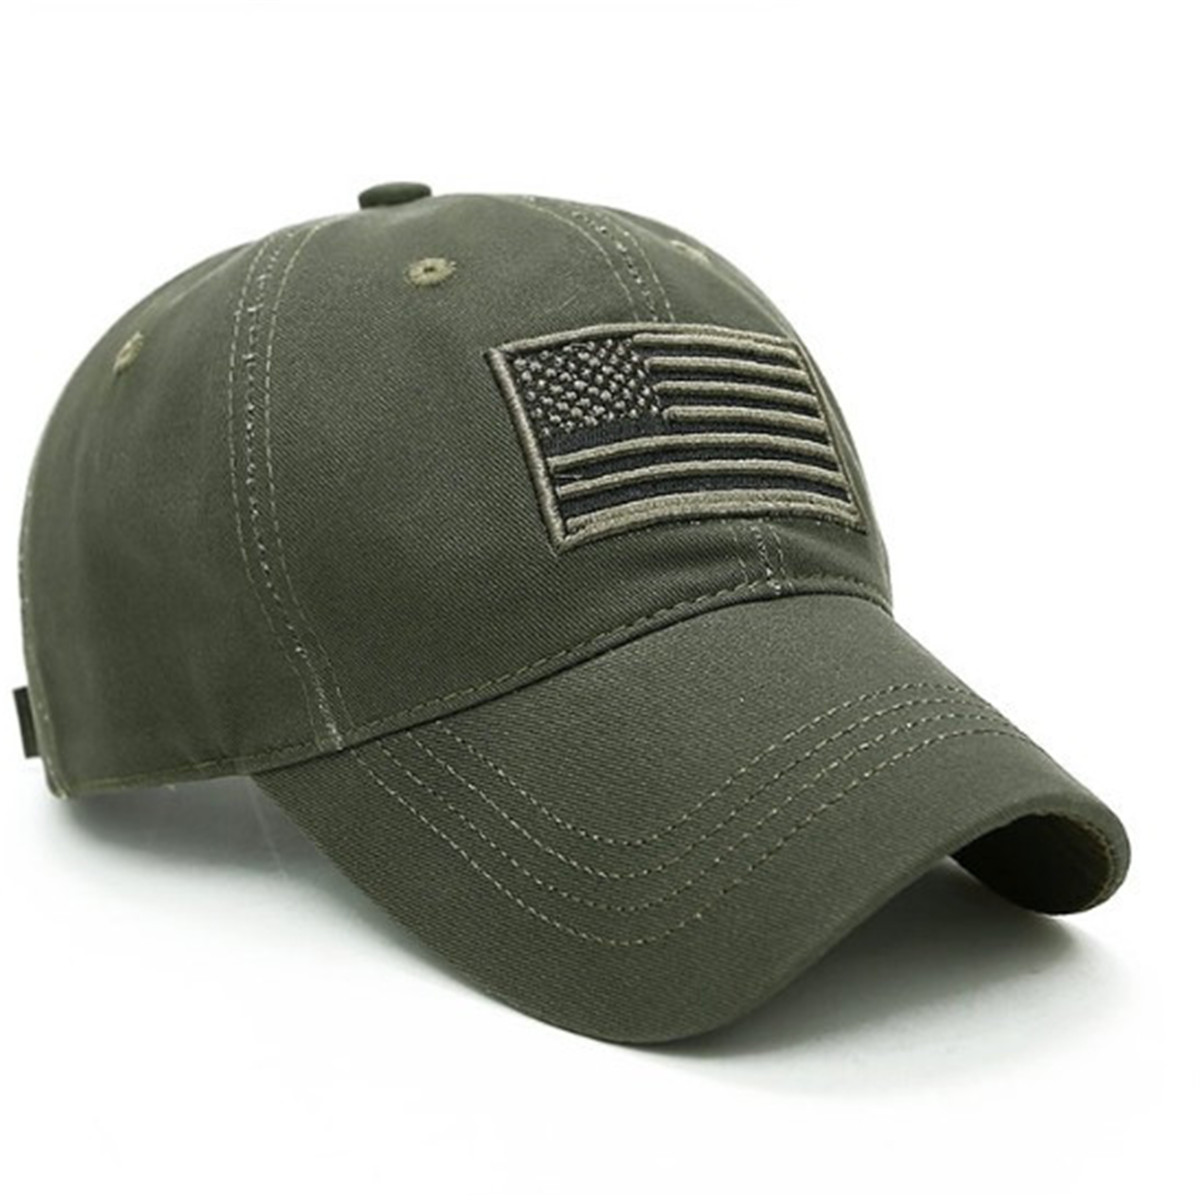 Mlb Army Hats - Army Military